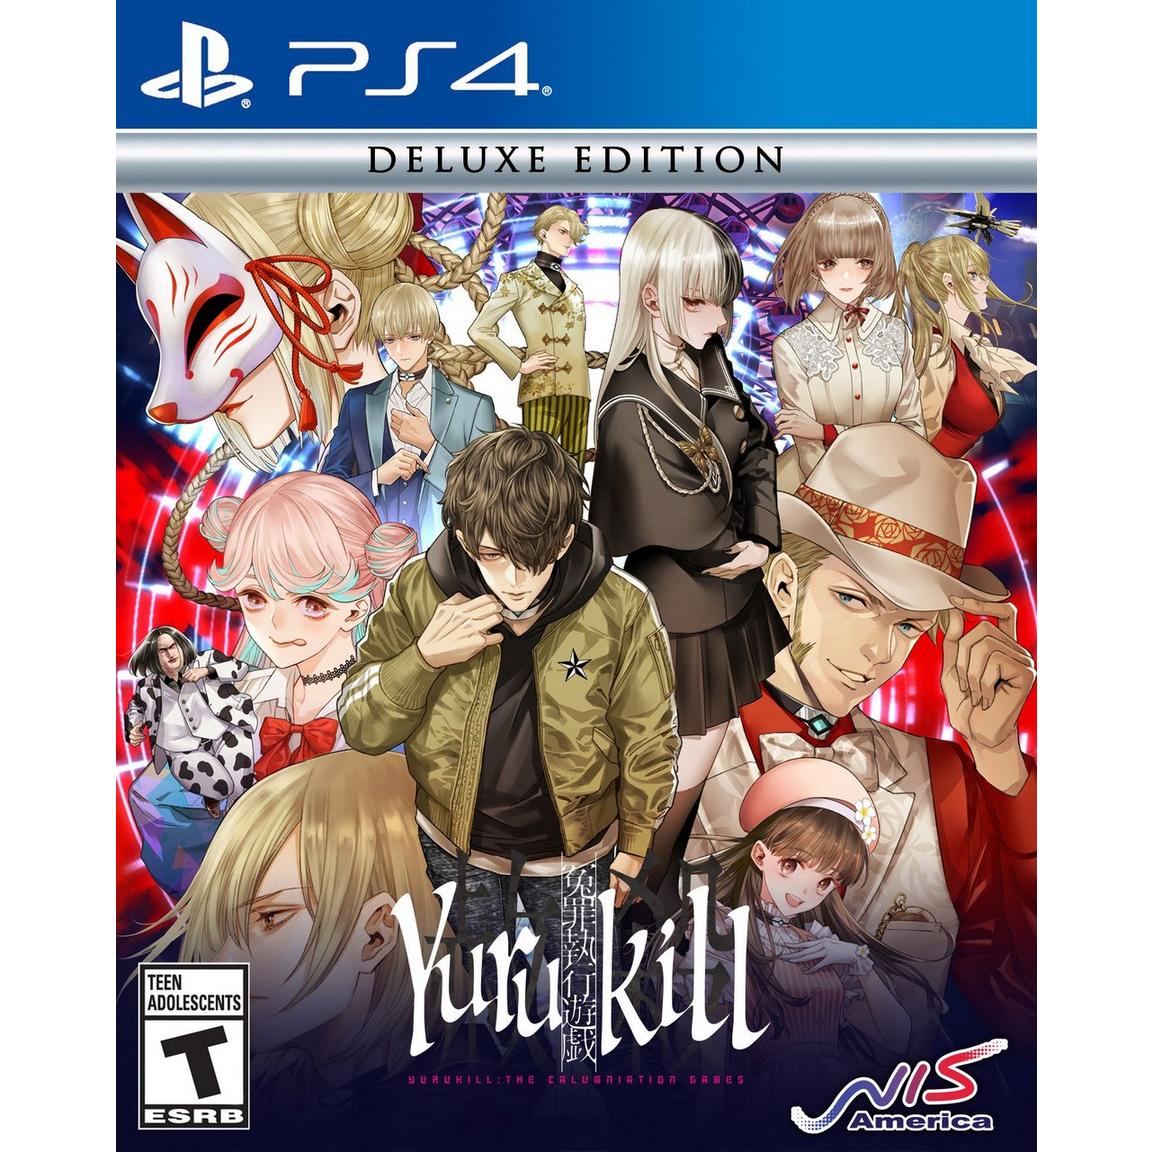 IzanagiGames PS4 Yurukill: The Calumniation Games Deluxe Edition